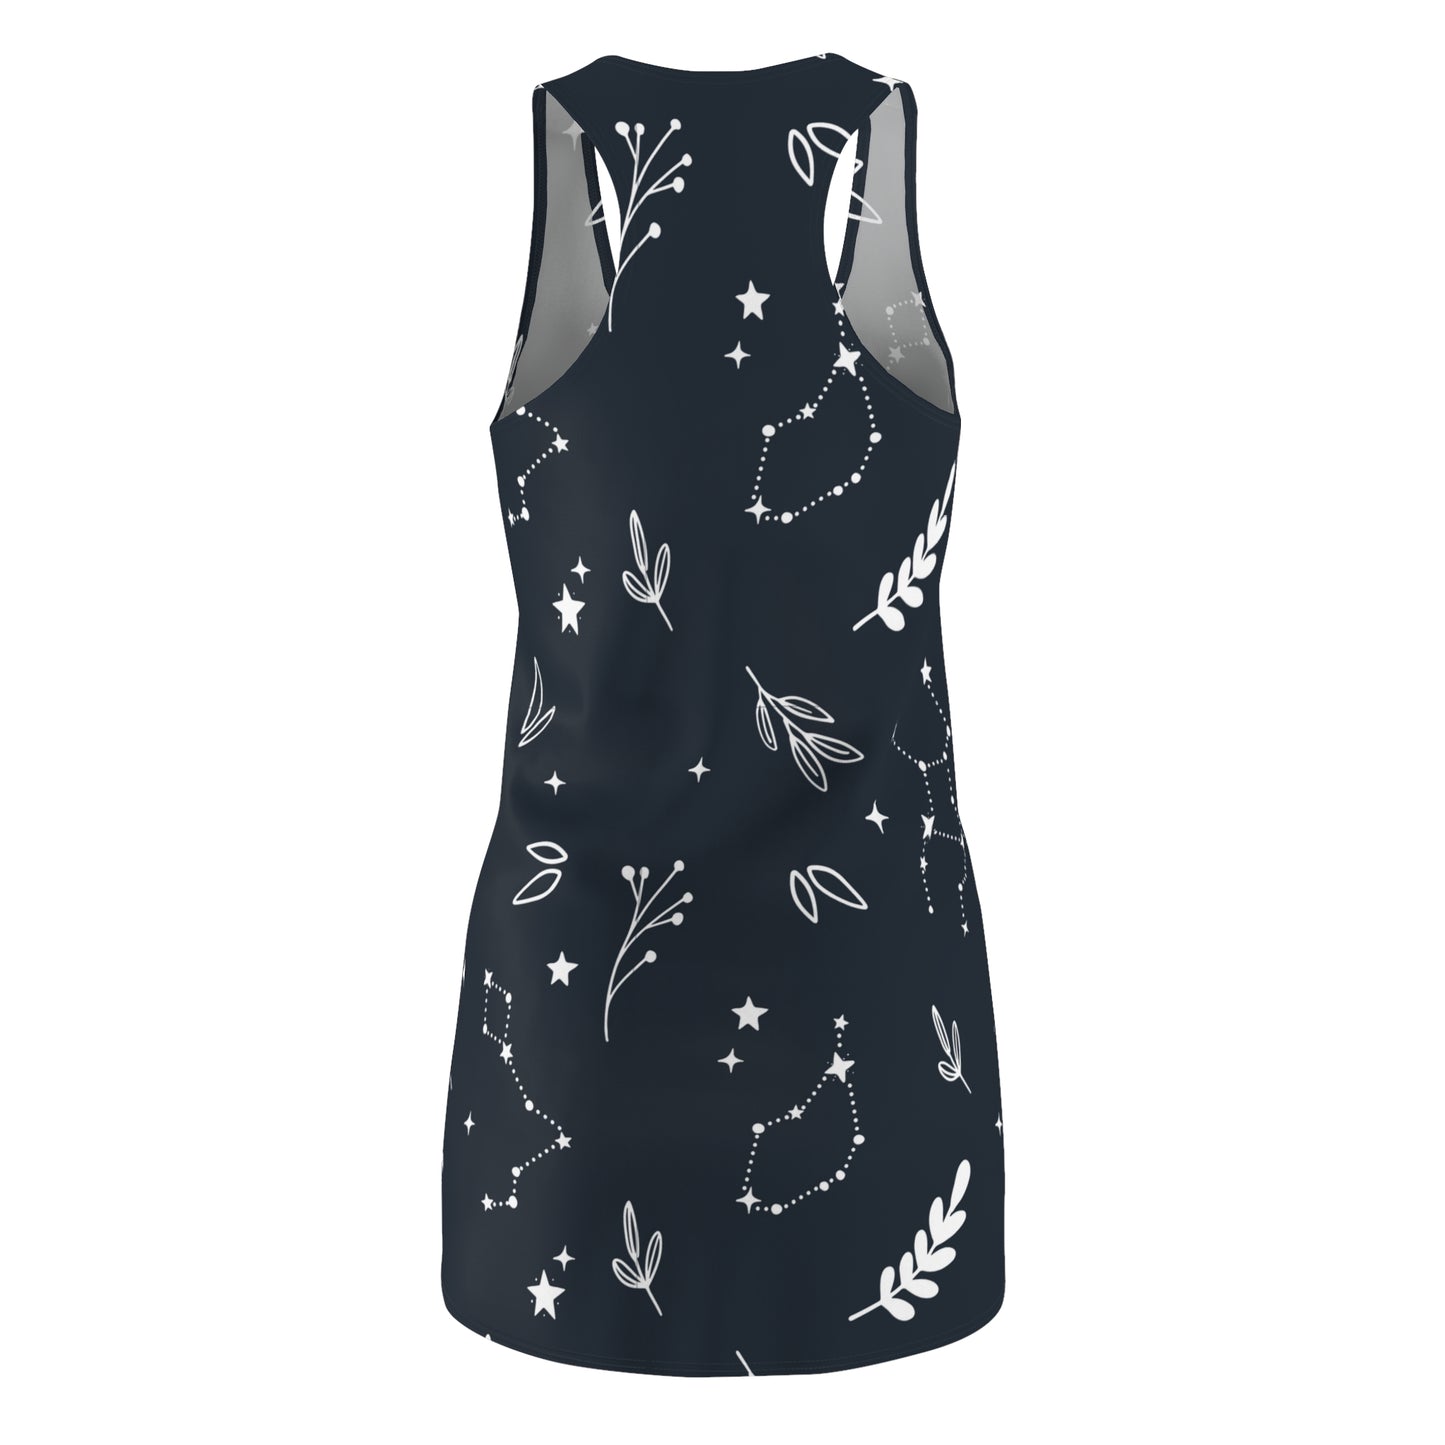 Leafy Constellation Sleep Shirt